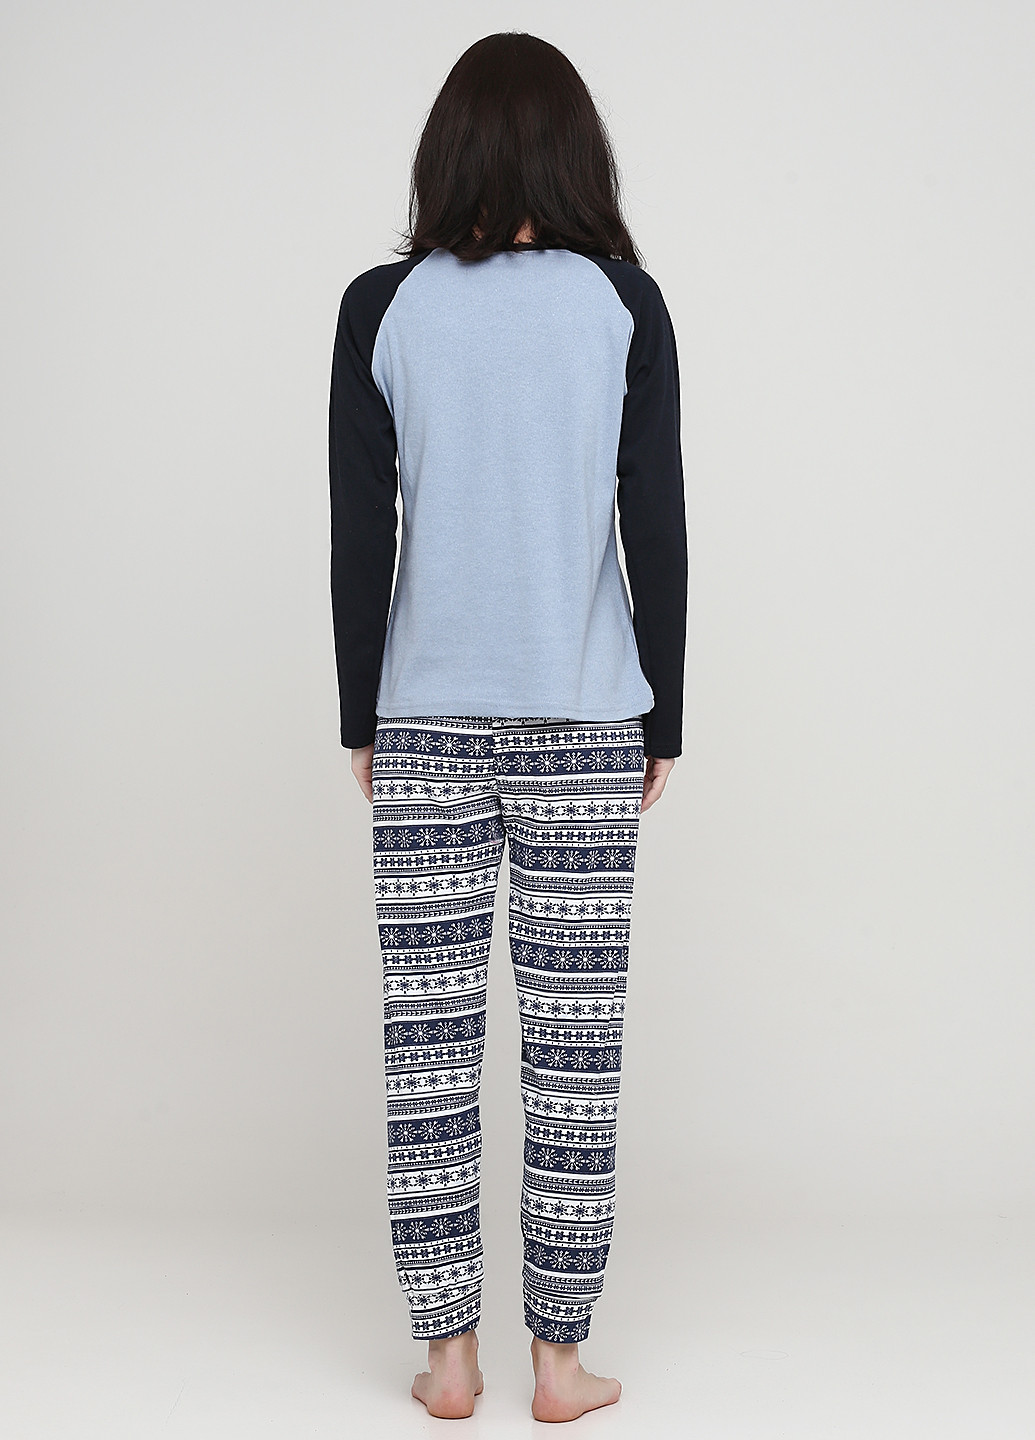 Темно-синяя всесезон пижама (лонгслив, брюки) лонгслив + брюки Fawn